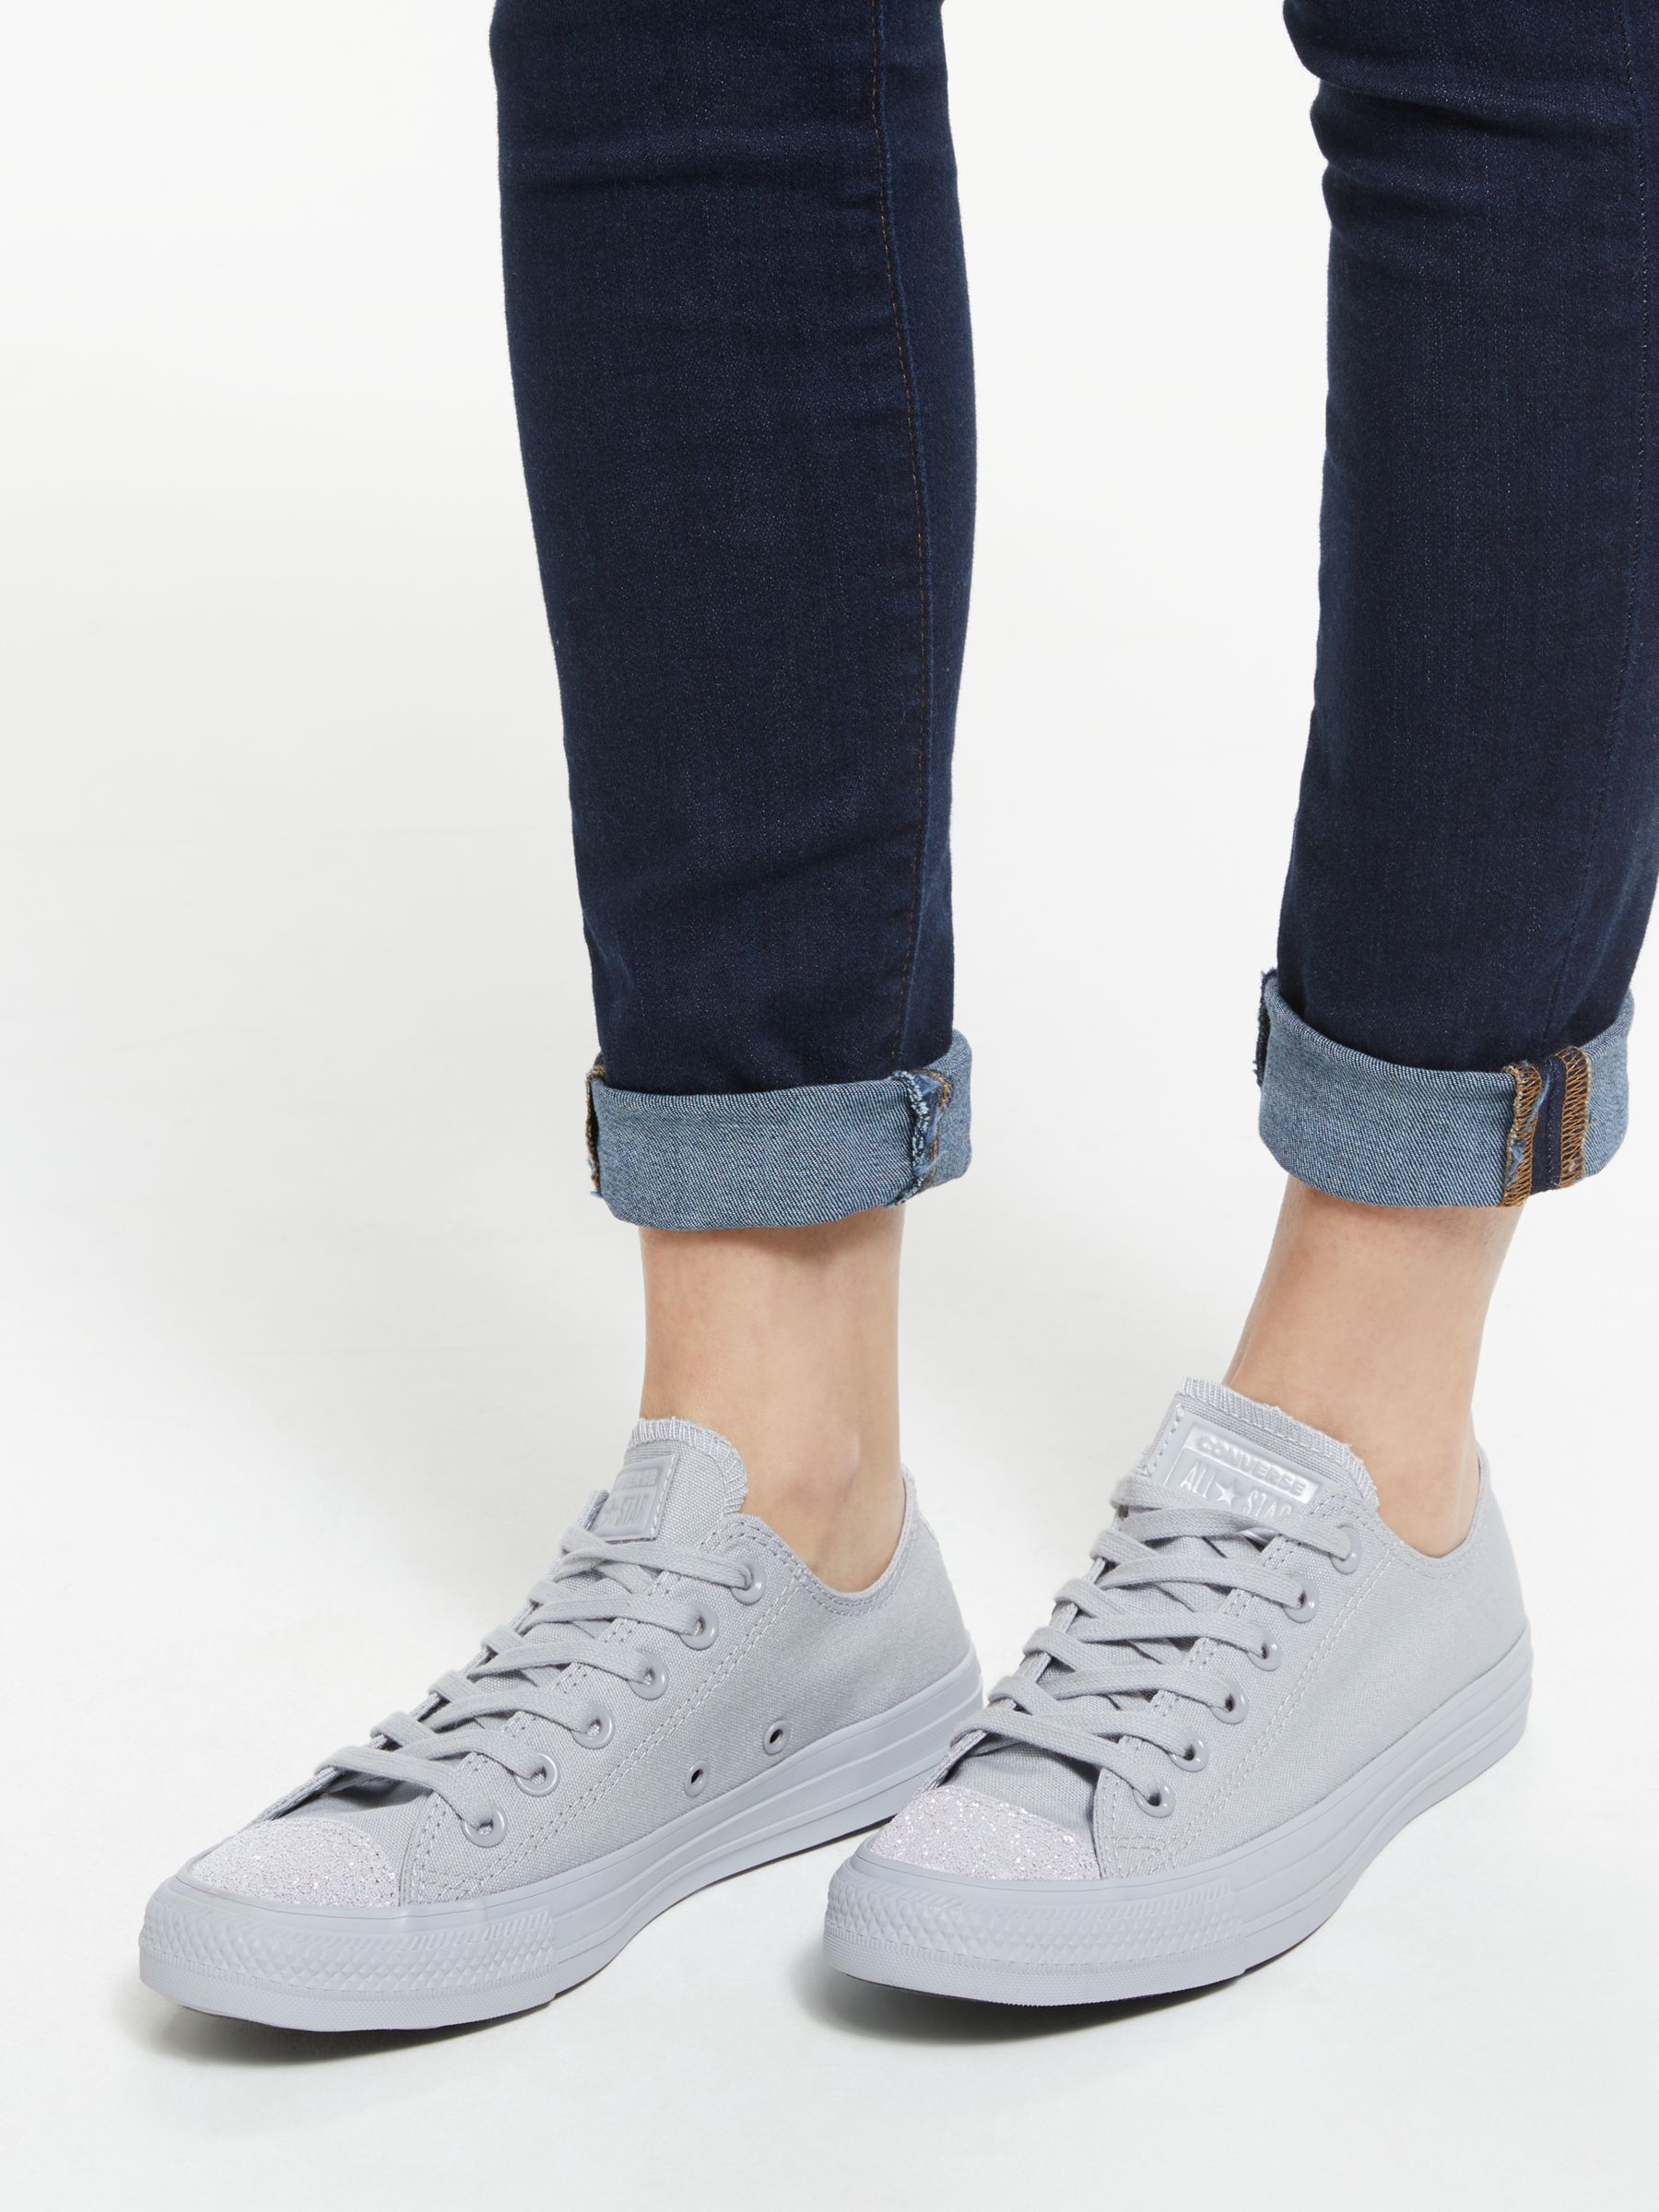 womens gray converse shoes